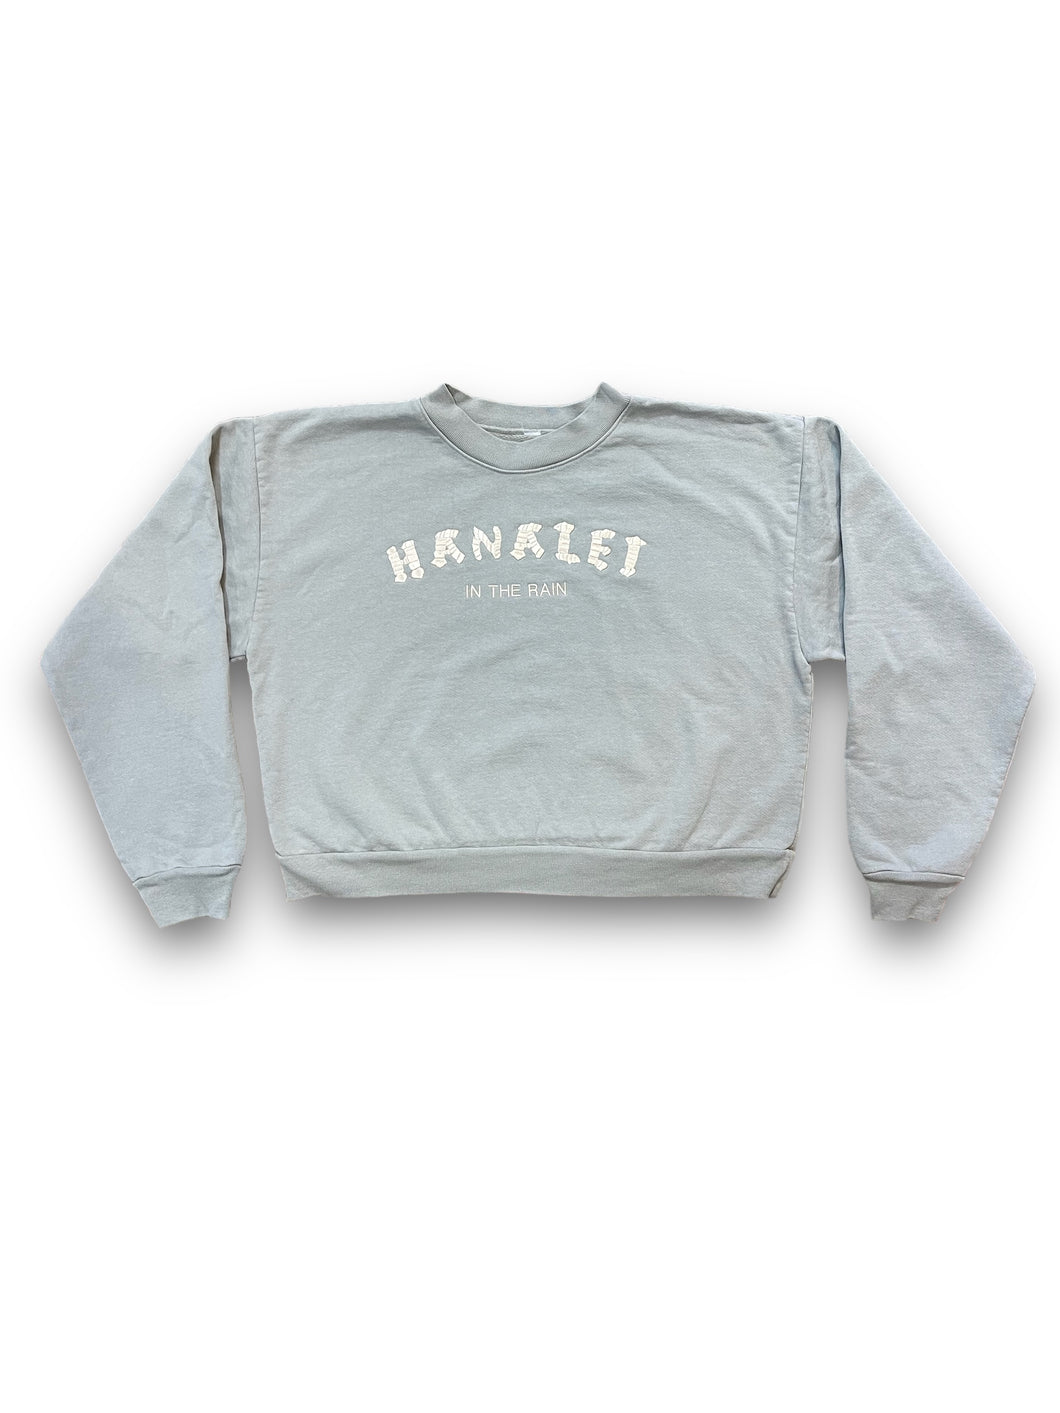 HANALEI in the rain - CROP Sweatshirt (Sage)